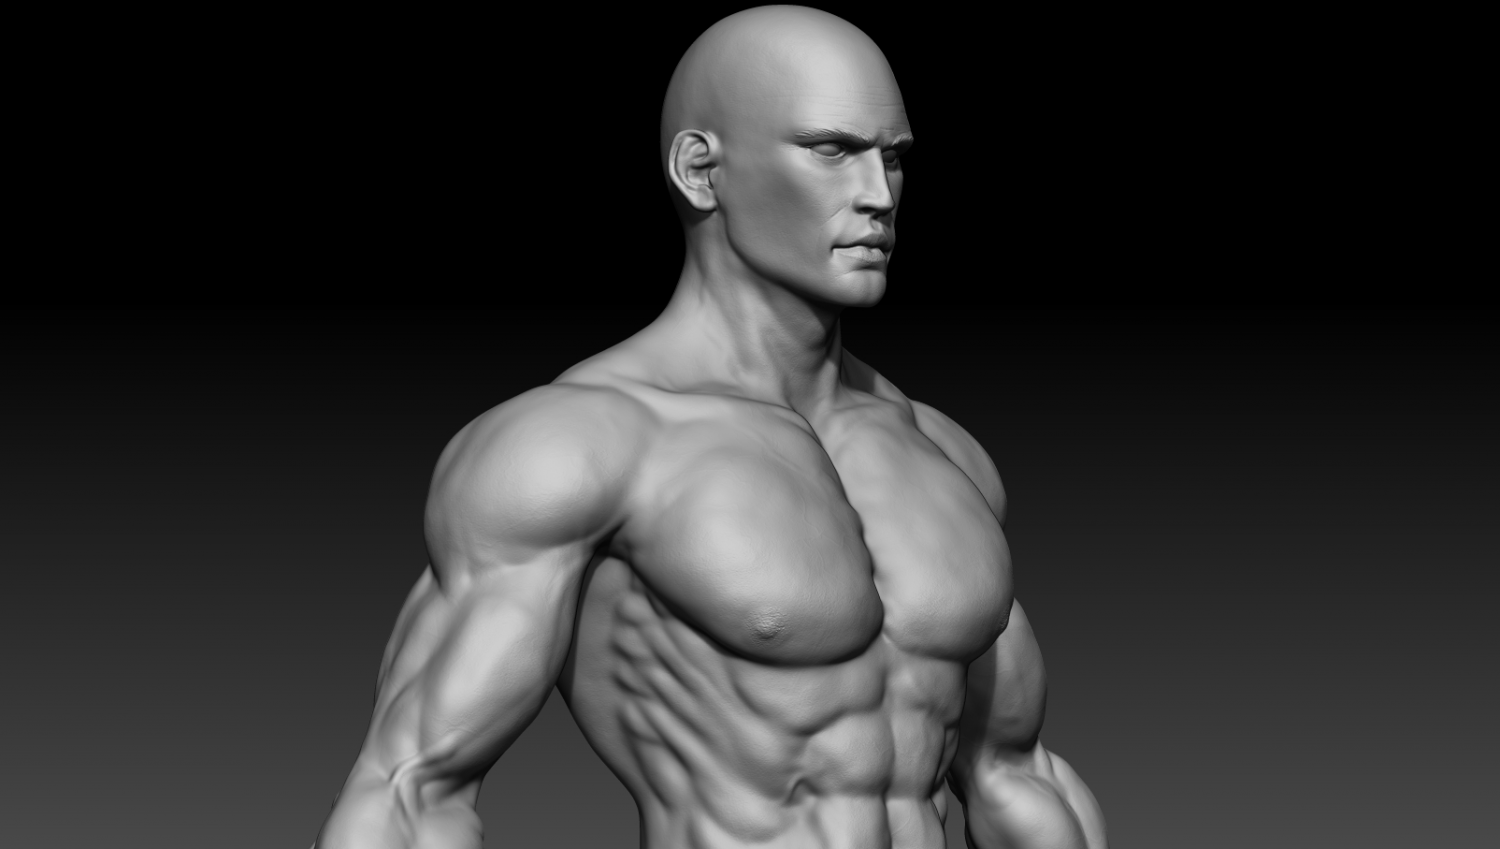 strong man 3d model zbrush